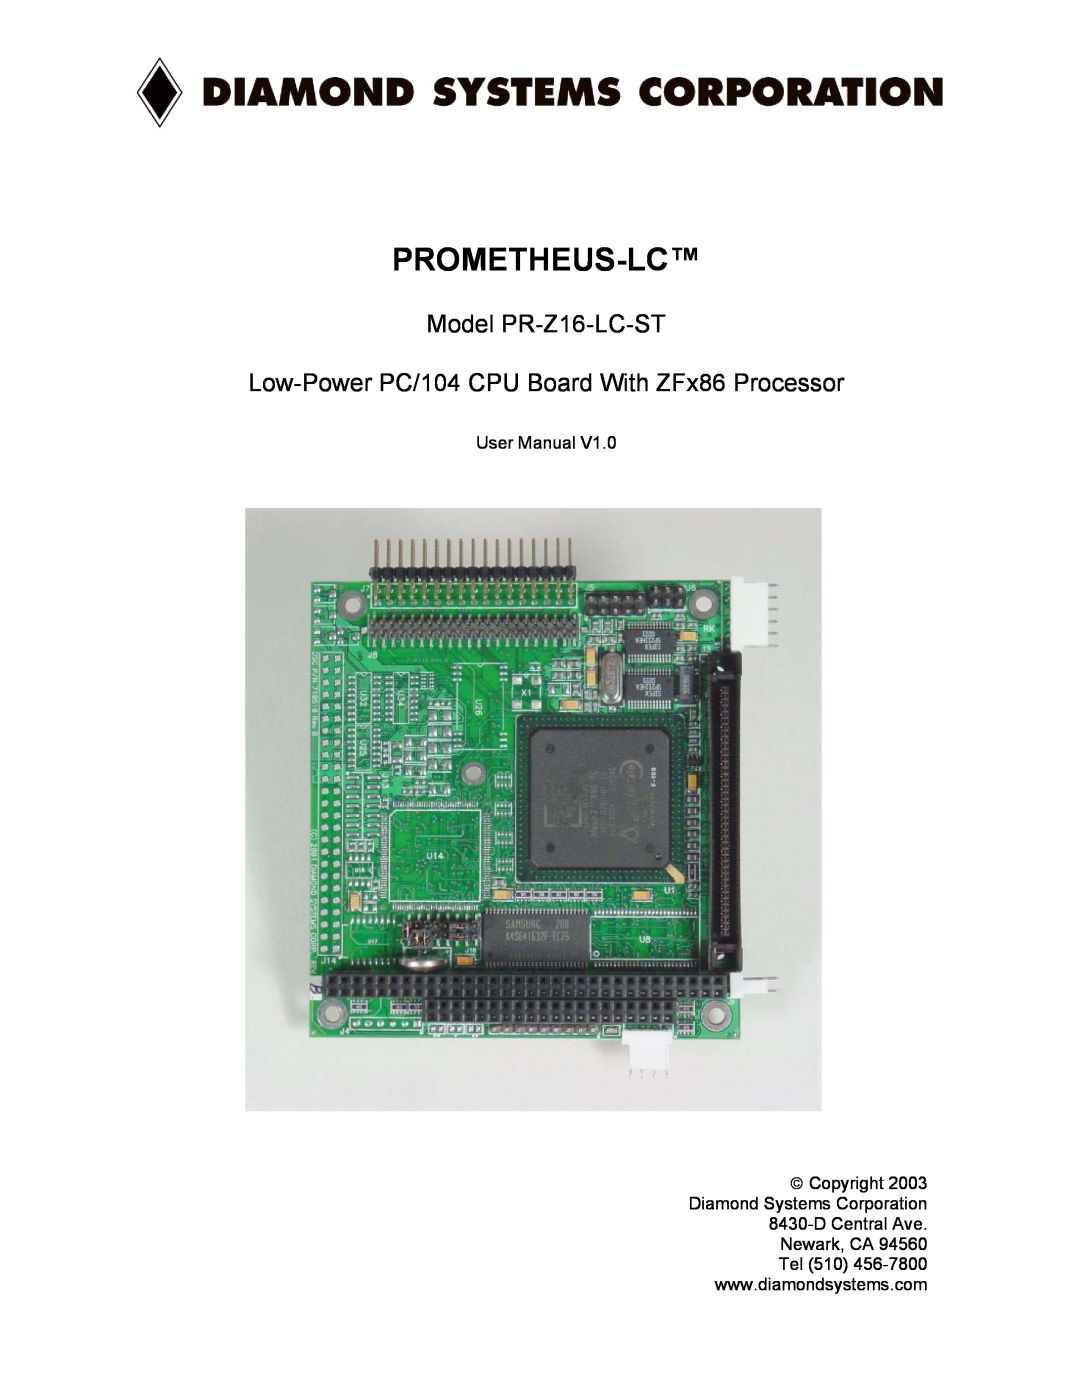 Diamond Systems Low-Power PC/104 CPU Board With ZFx86 Processor, PR-Z16-LC-ST user manual Prometheus-Lc 